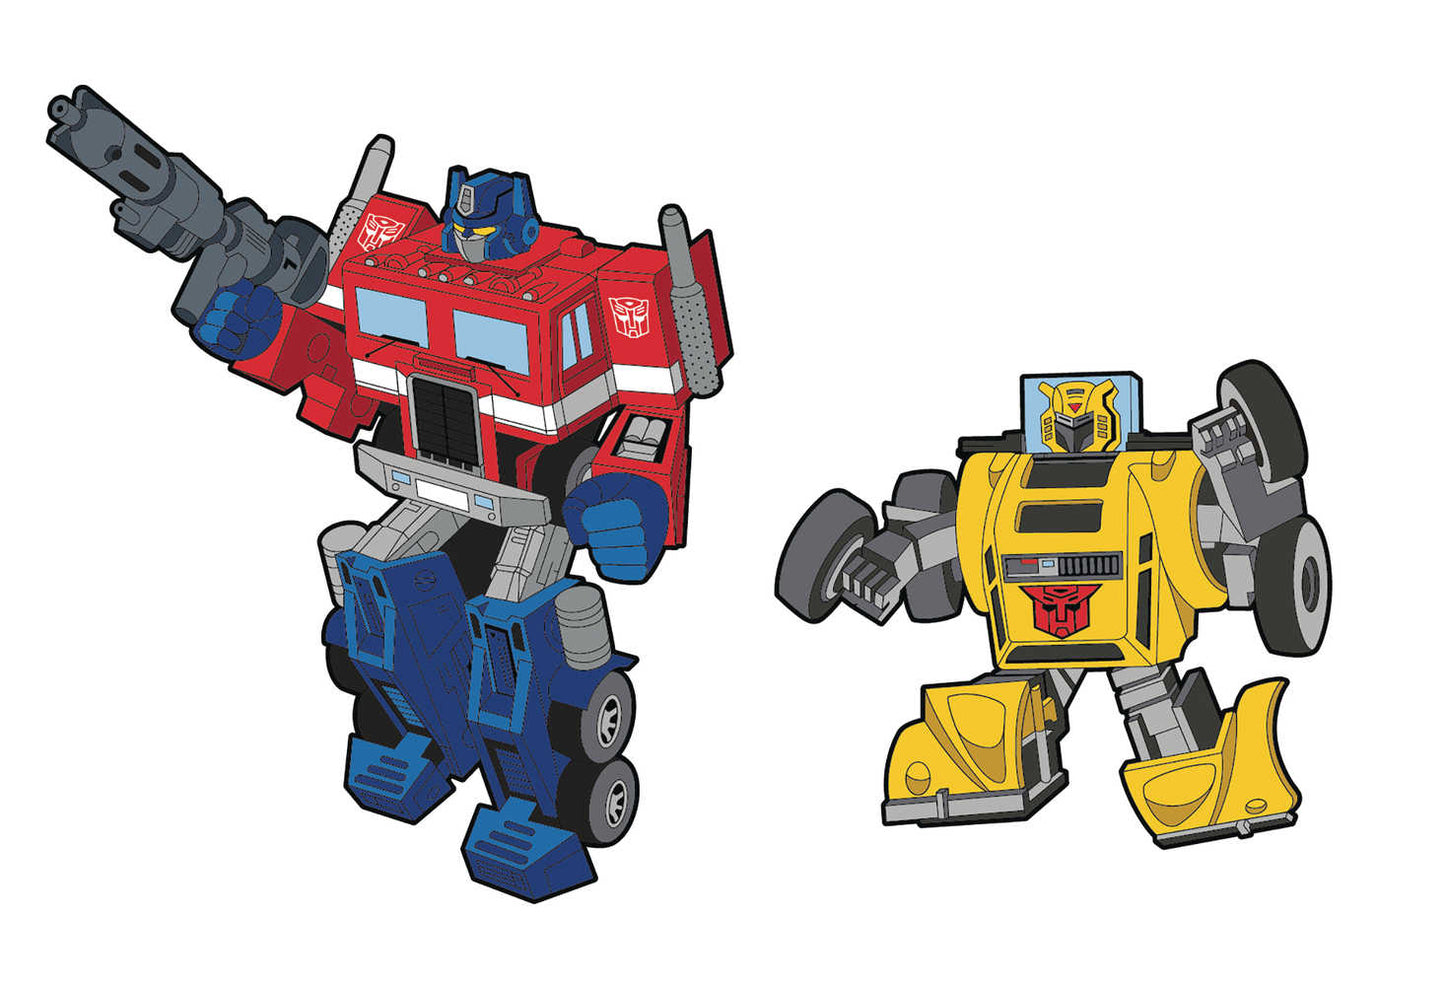 Transformers Optimus Prime X Bumblebee Retro Pin Set - The Fourth Place